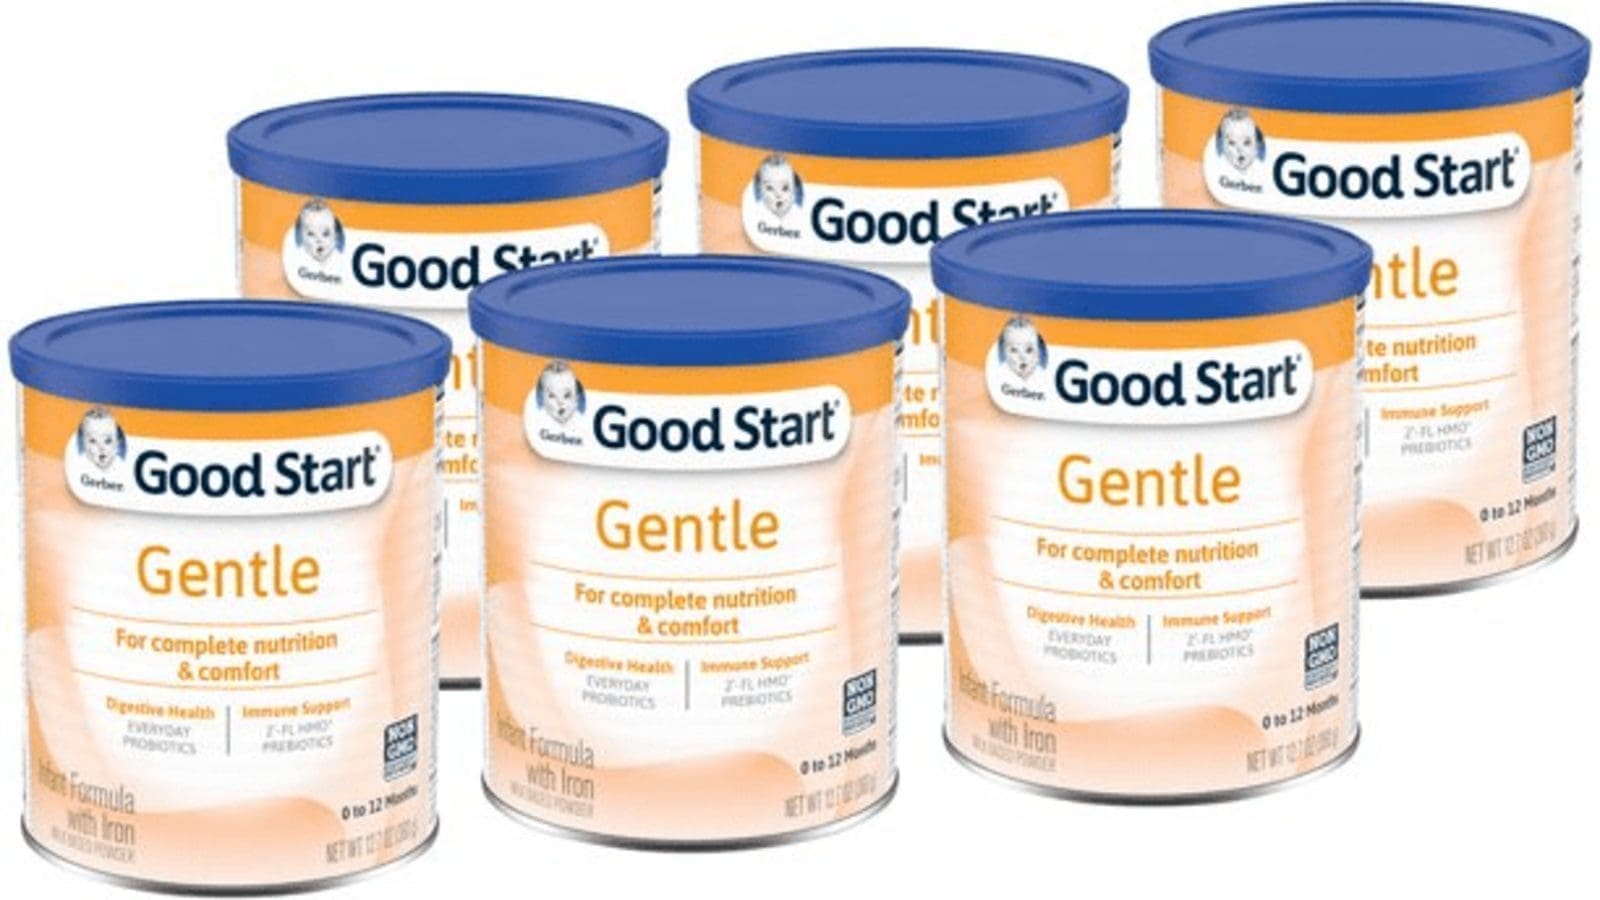 Perrigo Company acquires Nestlé’s Gateway infant formula plant and rights to Good Start infant formula brand